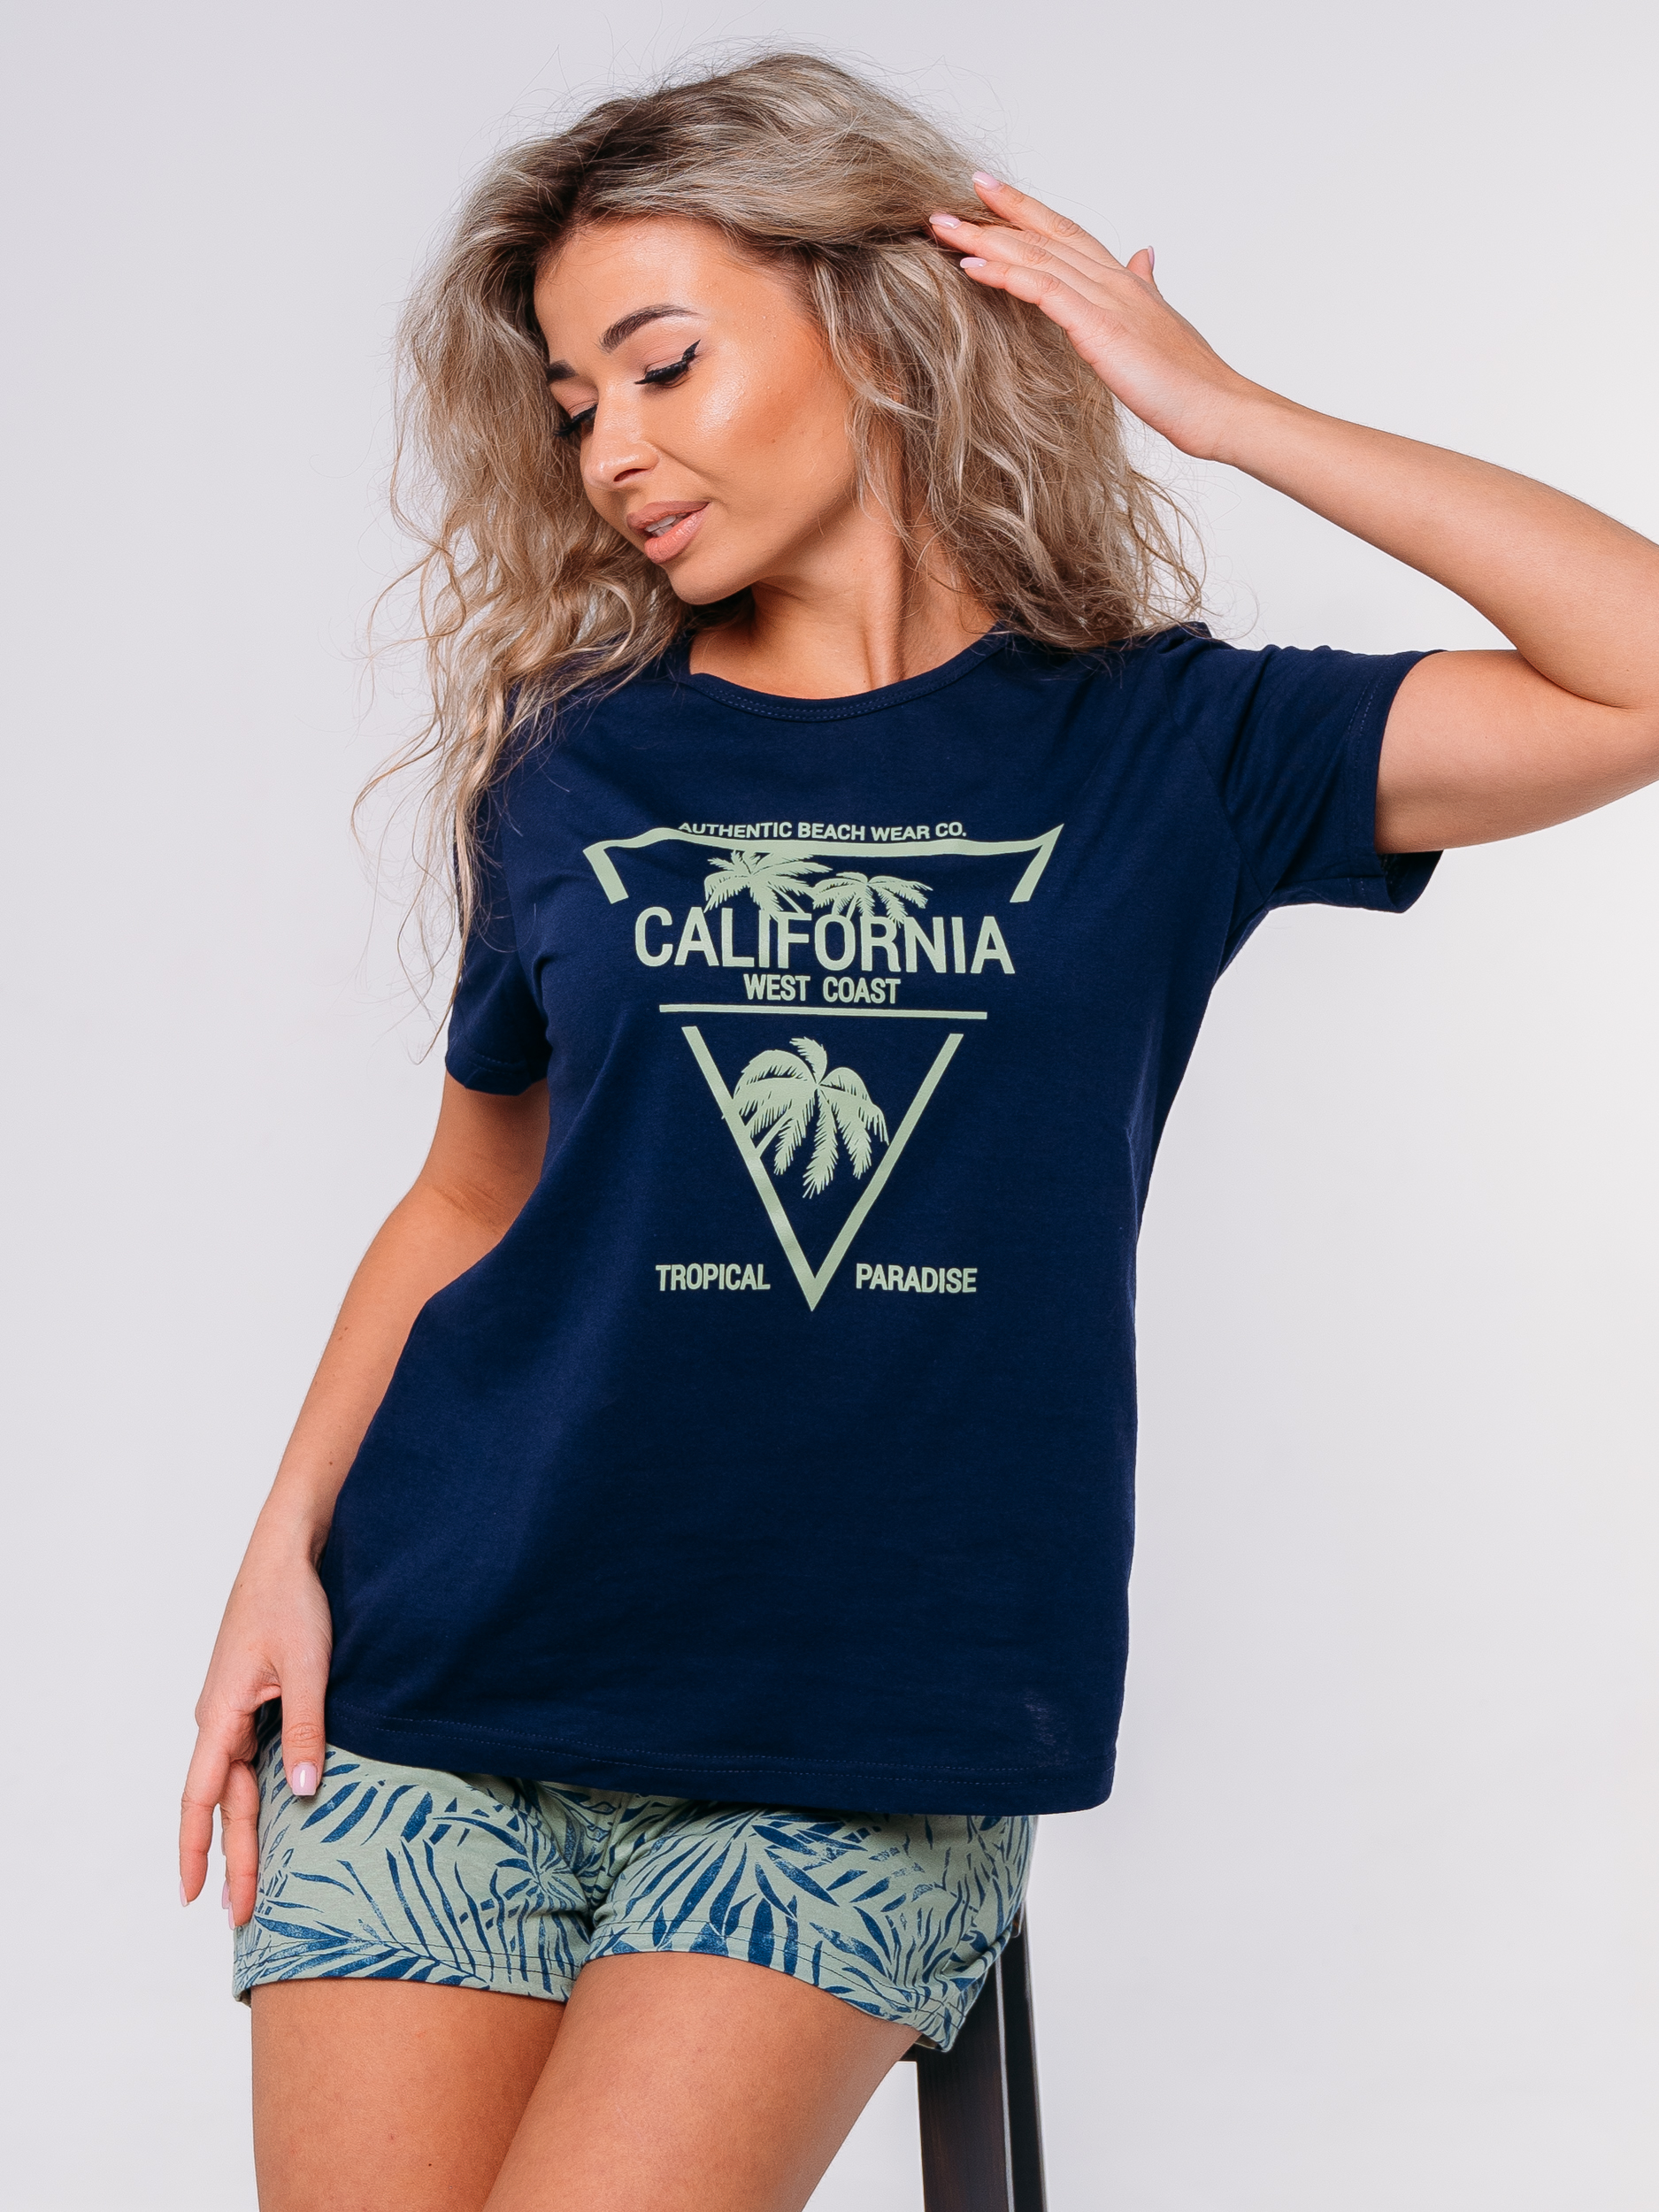 Пижама женская Cool Look Калифорния-1 синяя 48 RU